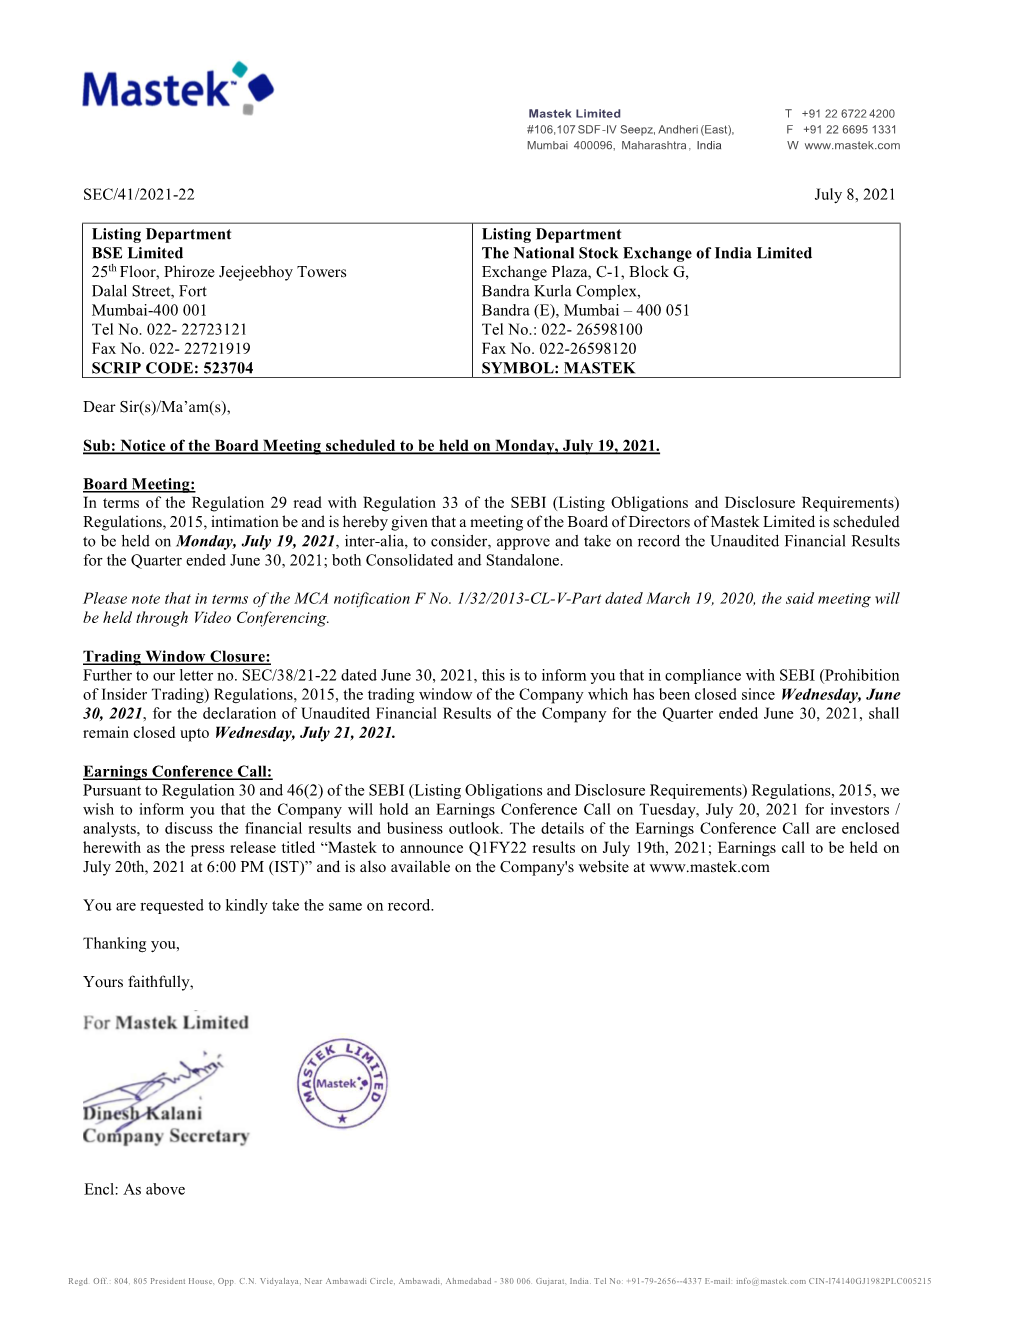 SEC/41/2021-22 July 8, 2021 Listing Department BSE Limited 25Th Floor, Phiroze Jeejeebhoy Towers Dalal Street, Fort Mumbai-400 0